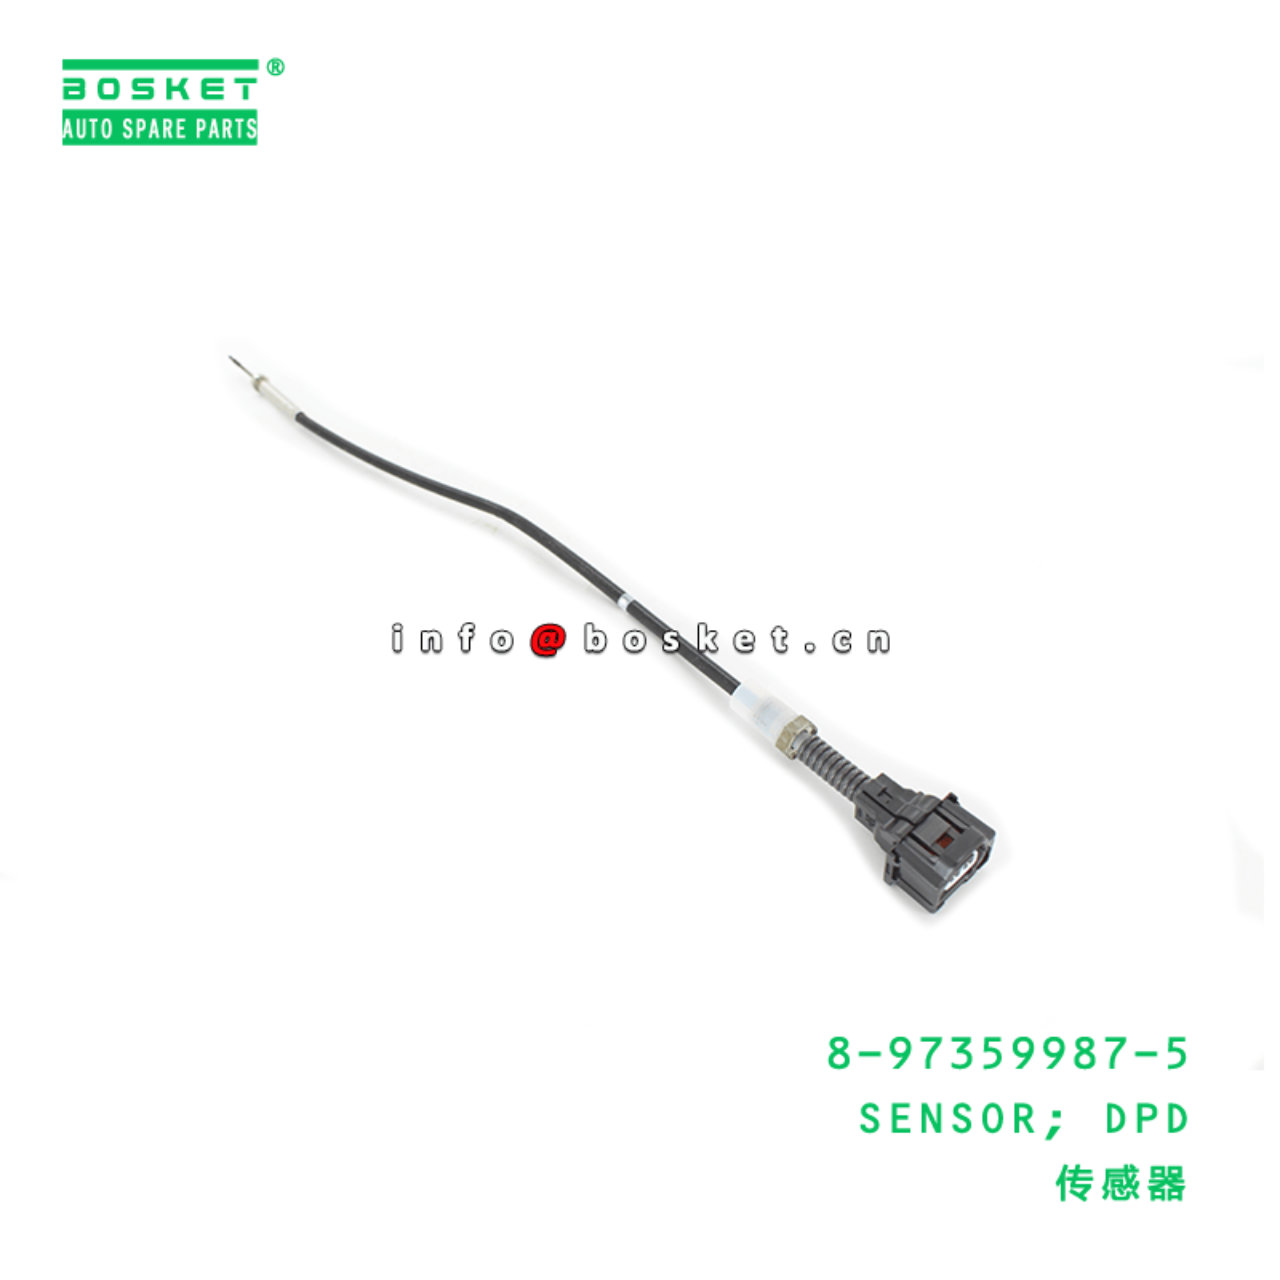 8-97359987-5 Dpd Sensor Suitable for ISUZU FRR FSR NPR 8973599875 